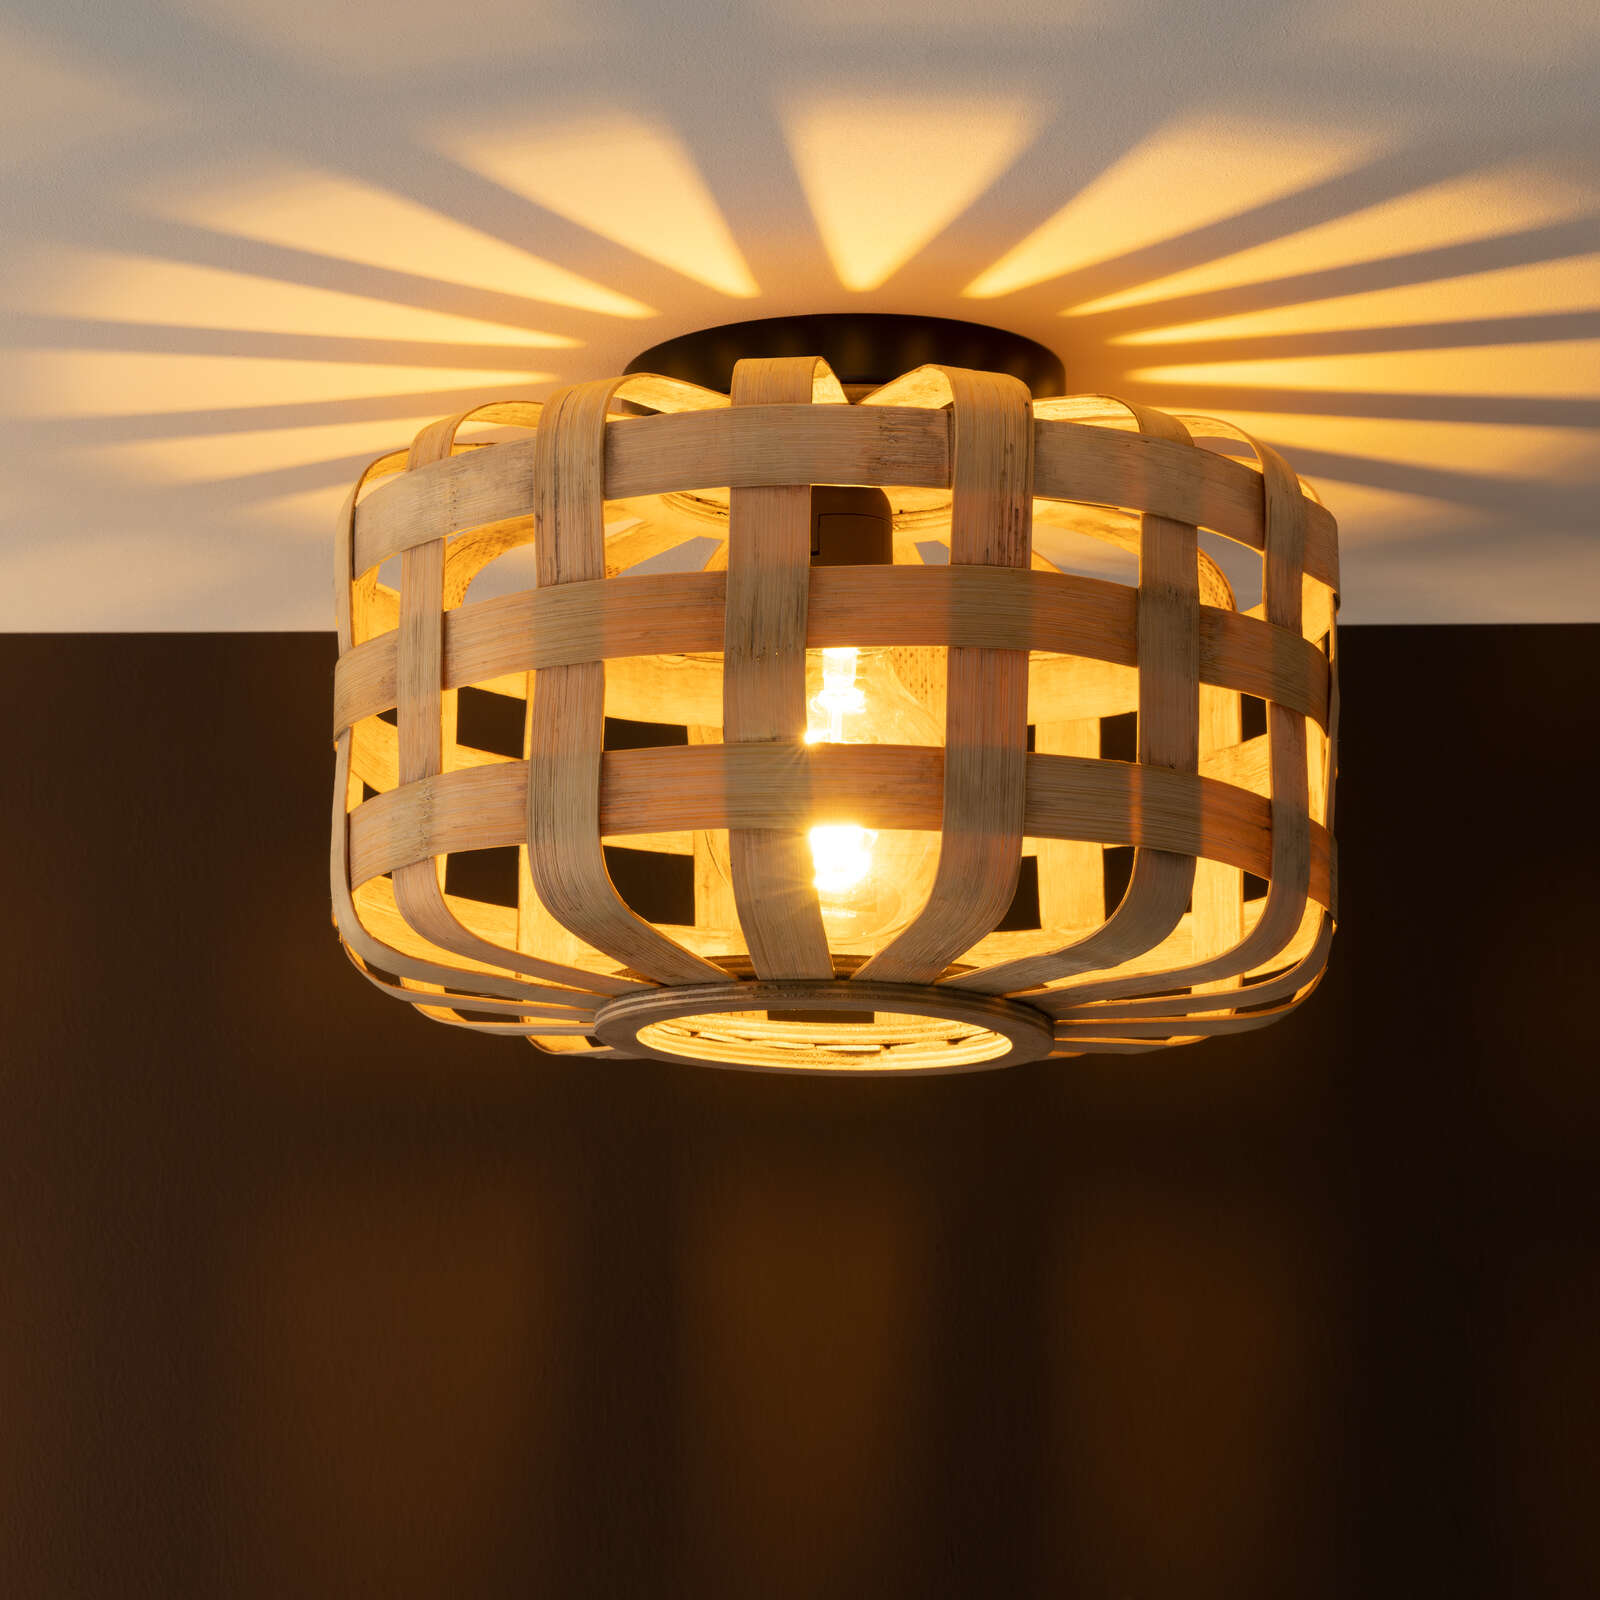             Bamboo ceiling light - Wilhelm 2 - Brown
        